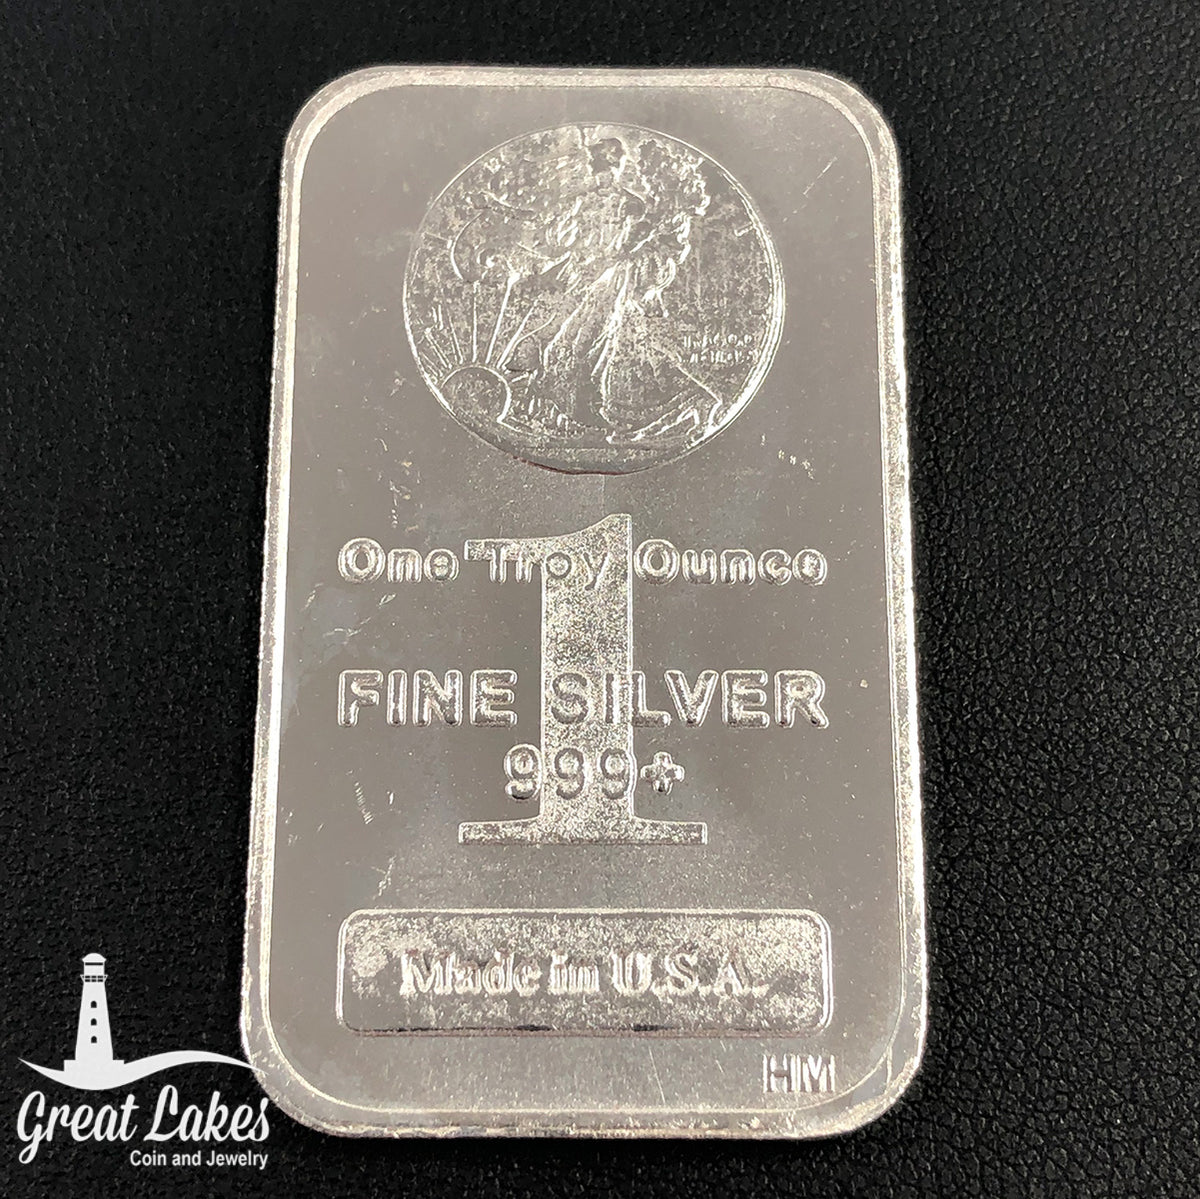 Highland Mint 1 oz Walking Liberty Silver Bar